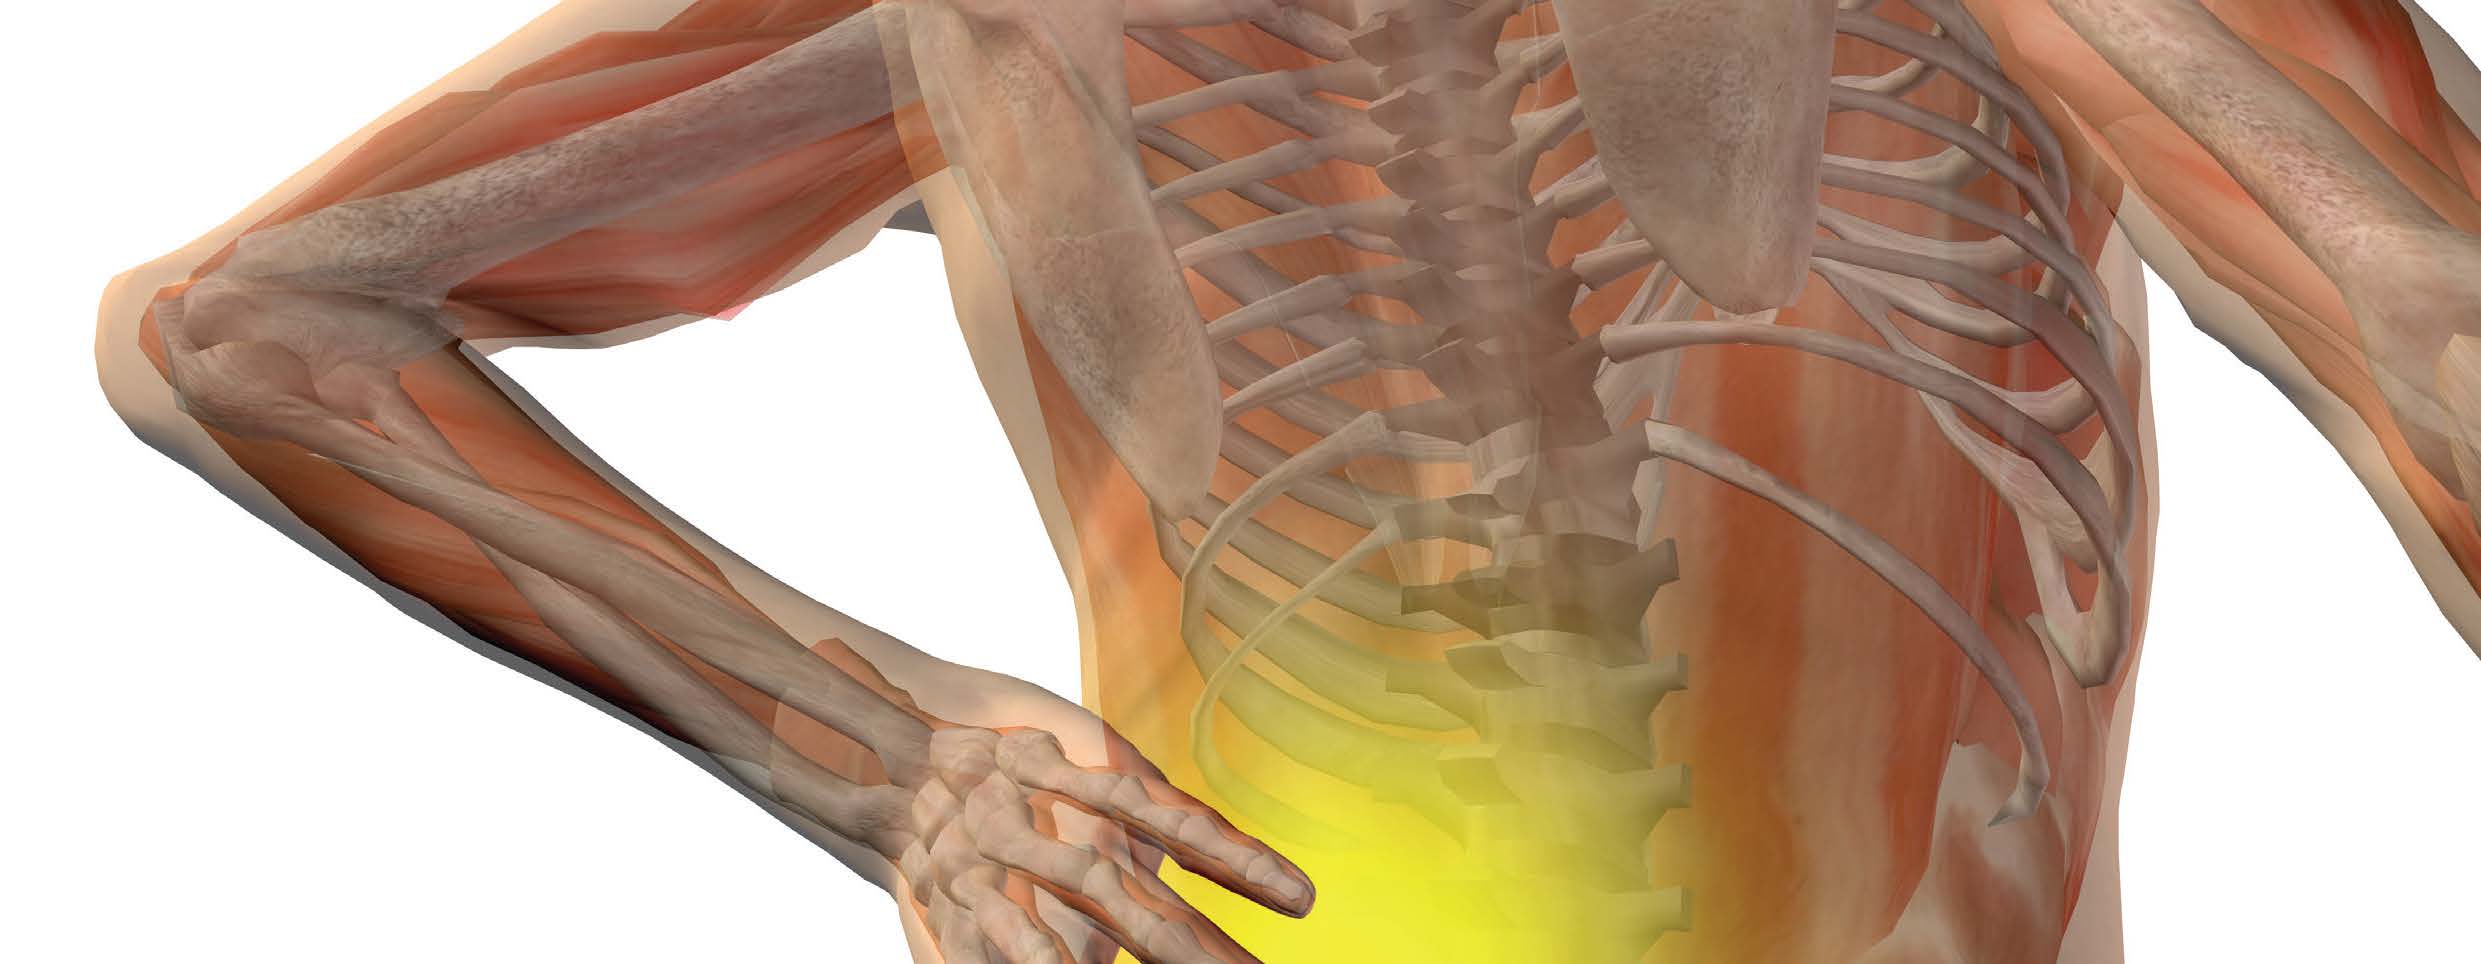 We’ve Got Your Back: Current Management of Acute Low Back Pain